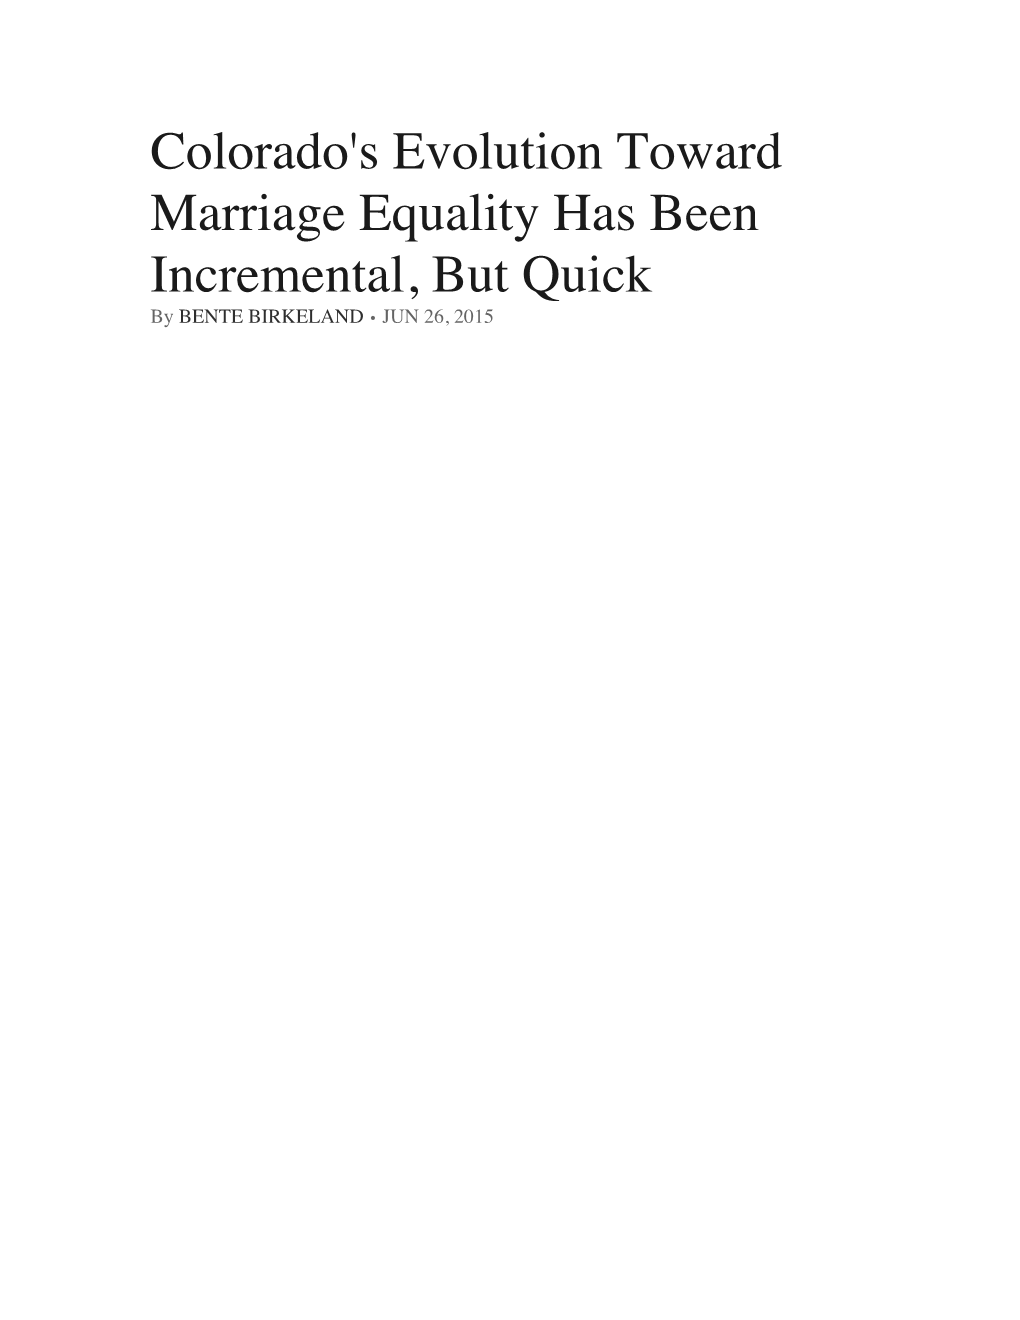 Colorado's Evolution Toward Marriage Equality Has Been Incremental, but Quick by BENTE BIRKELAND • JUN 26, 2015